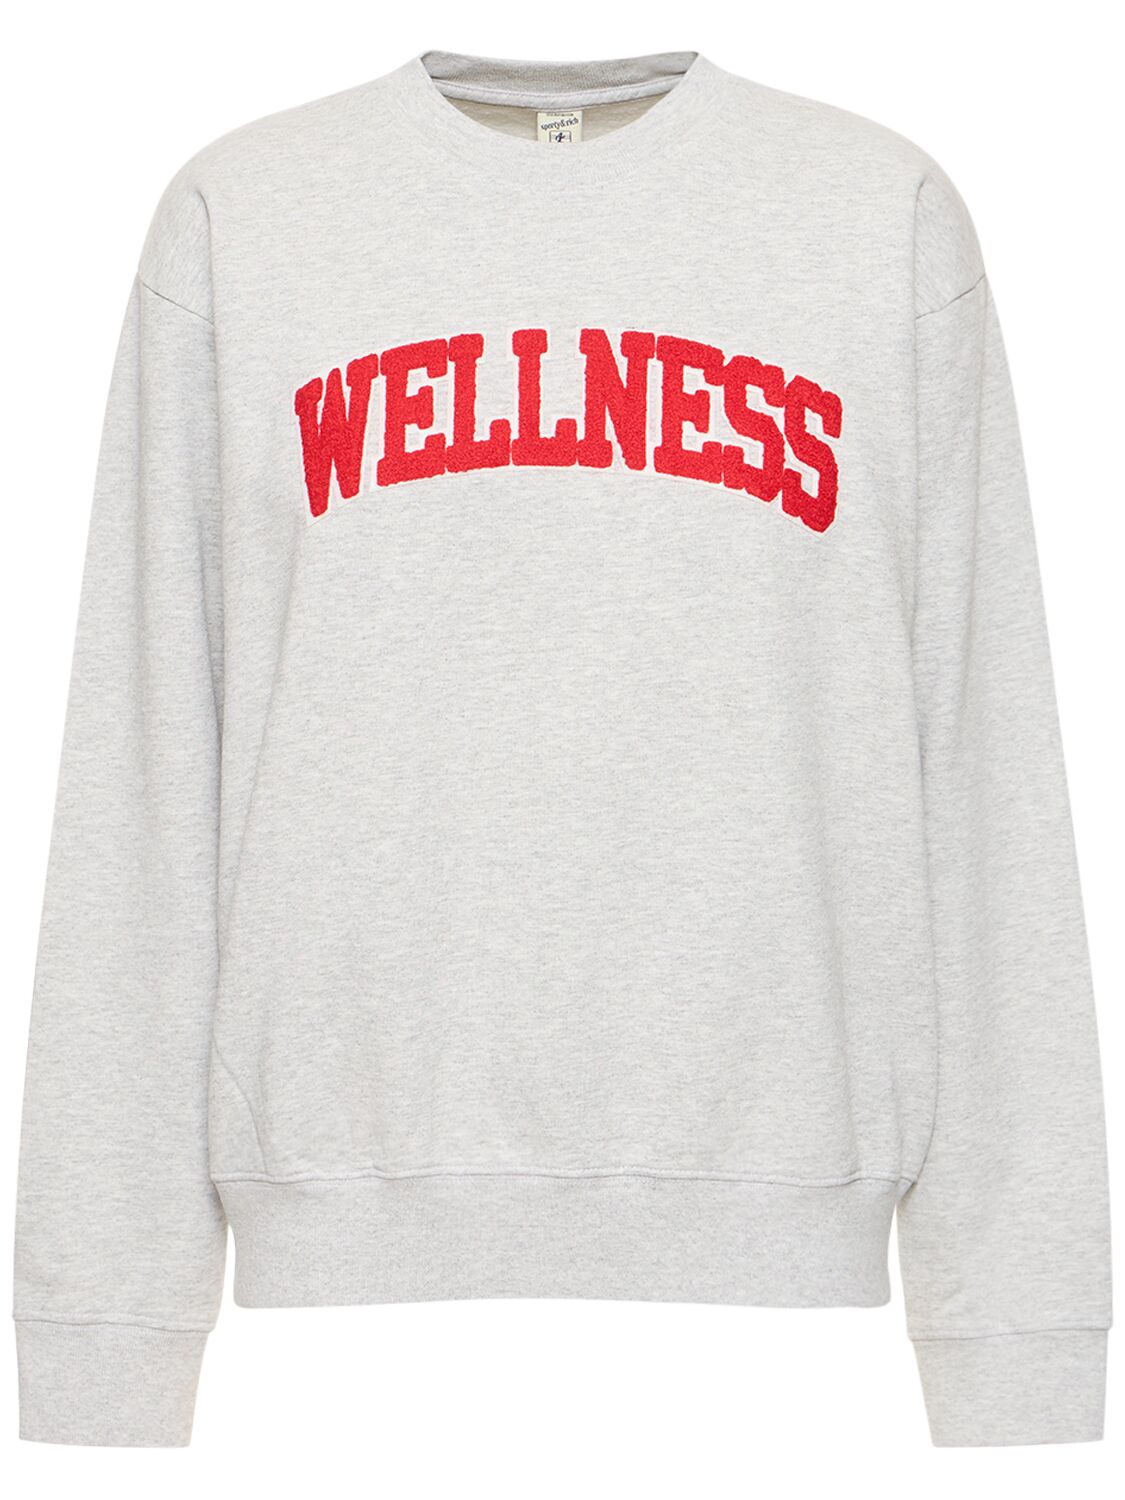 Wellness Ivy Unisex Crewneck Sweatshirt